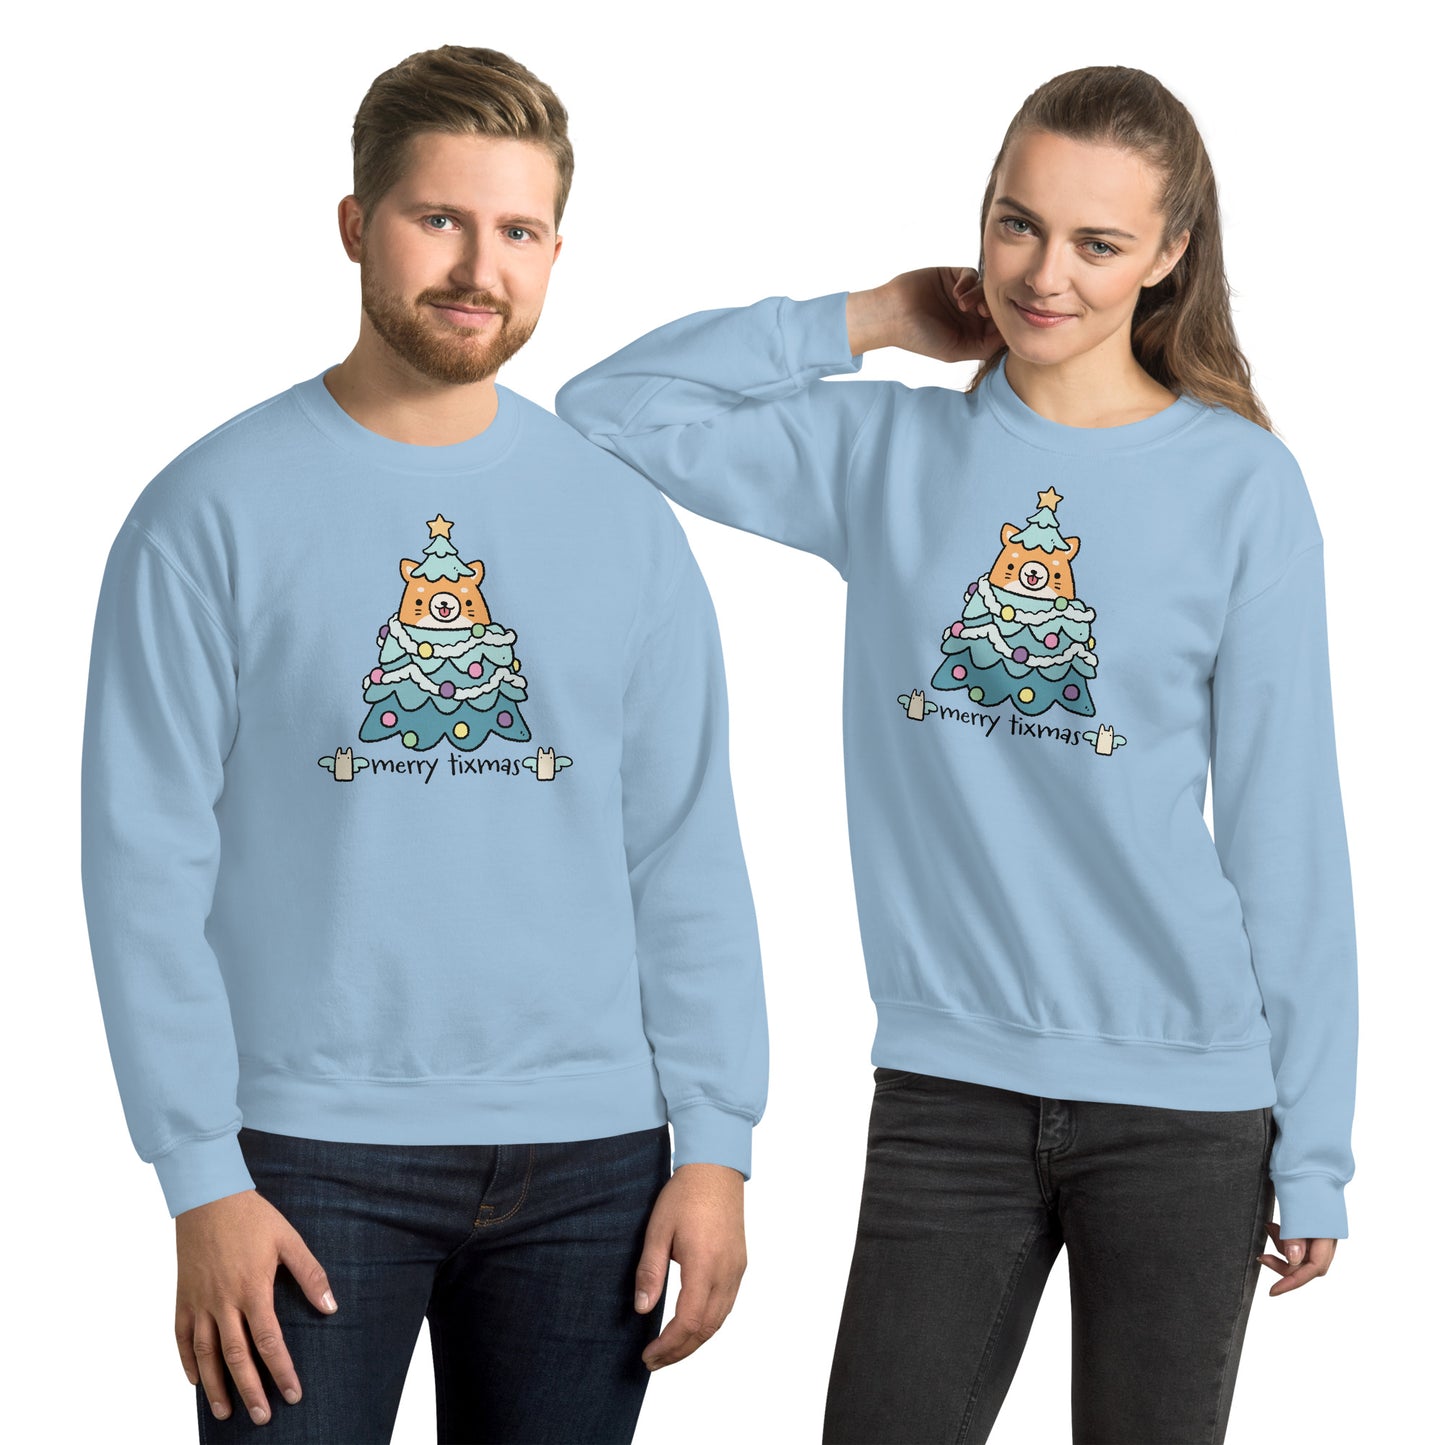 Tixee - Merry Tixmas Corgi Twee Unisex Sweatshirt